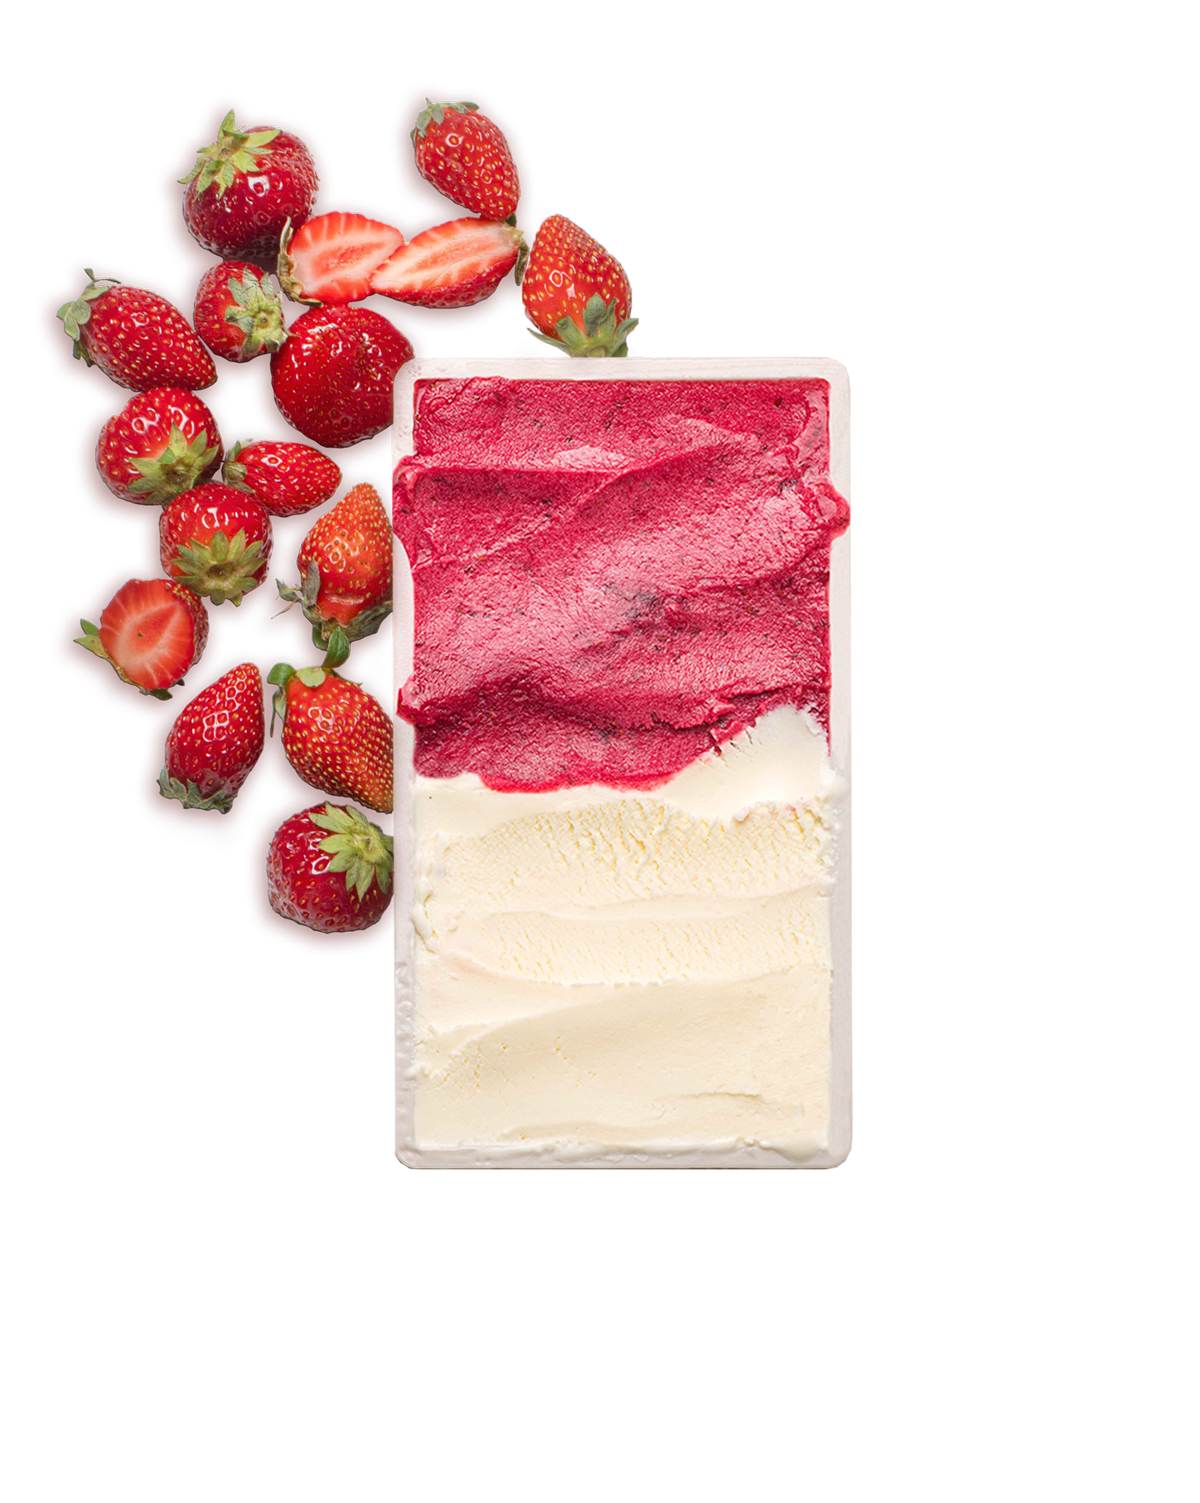 Fermented Yoghourt gelato - Strawberry sorbet